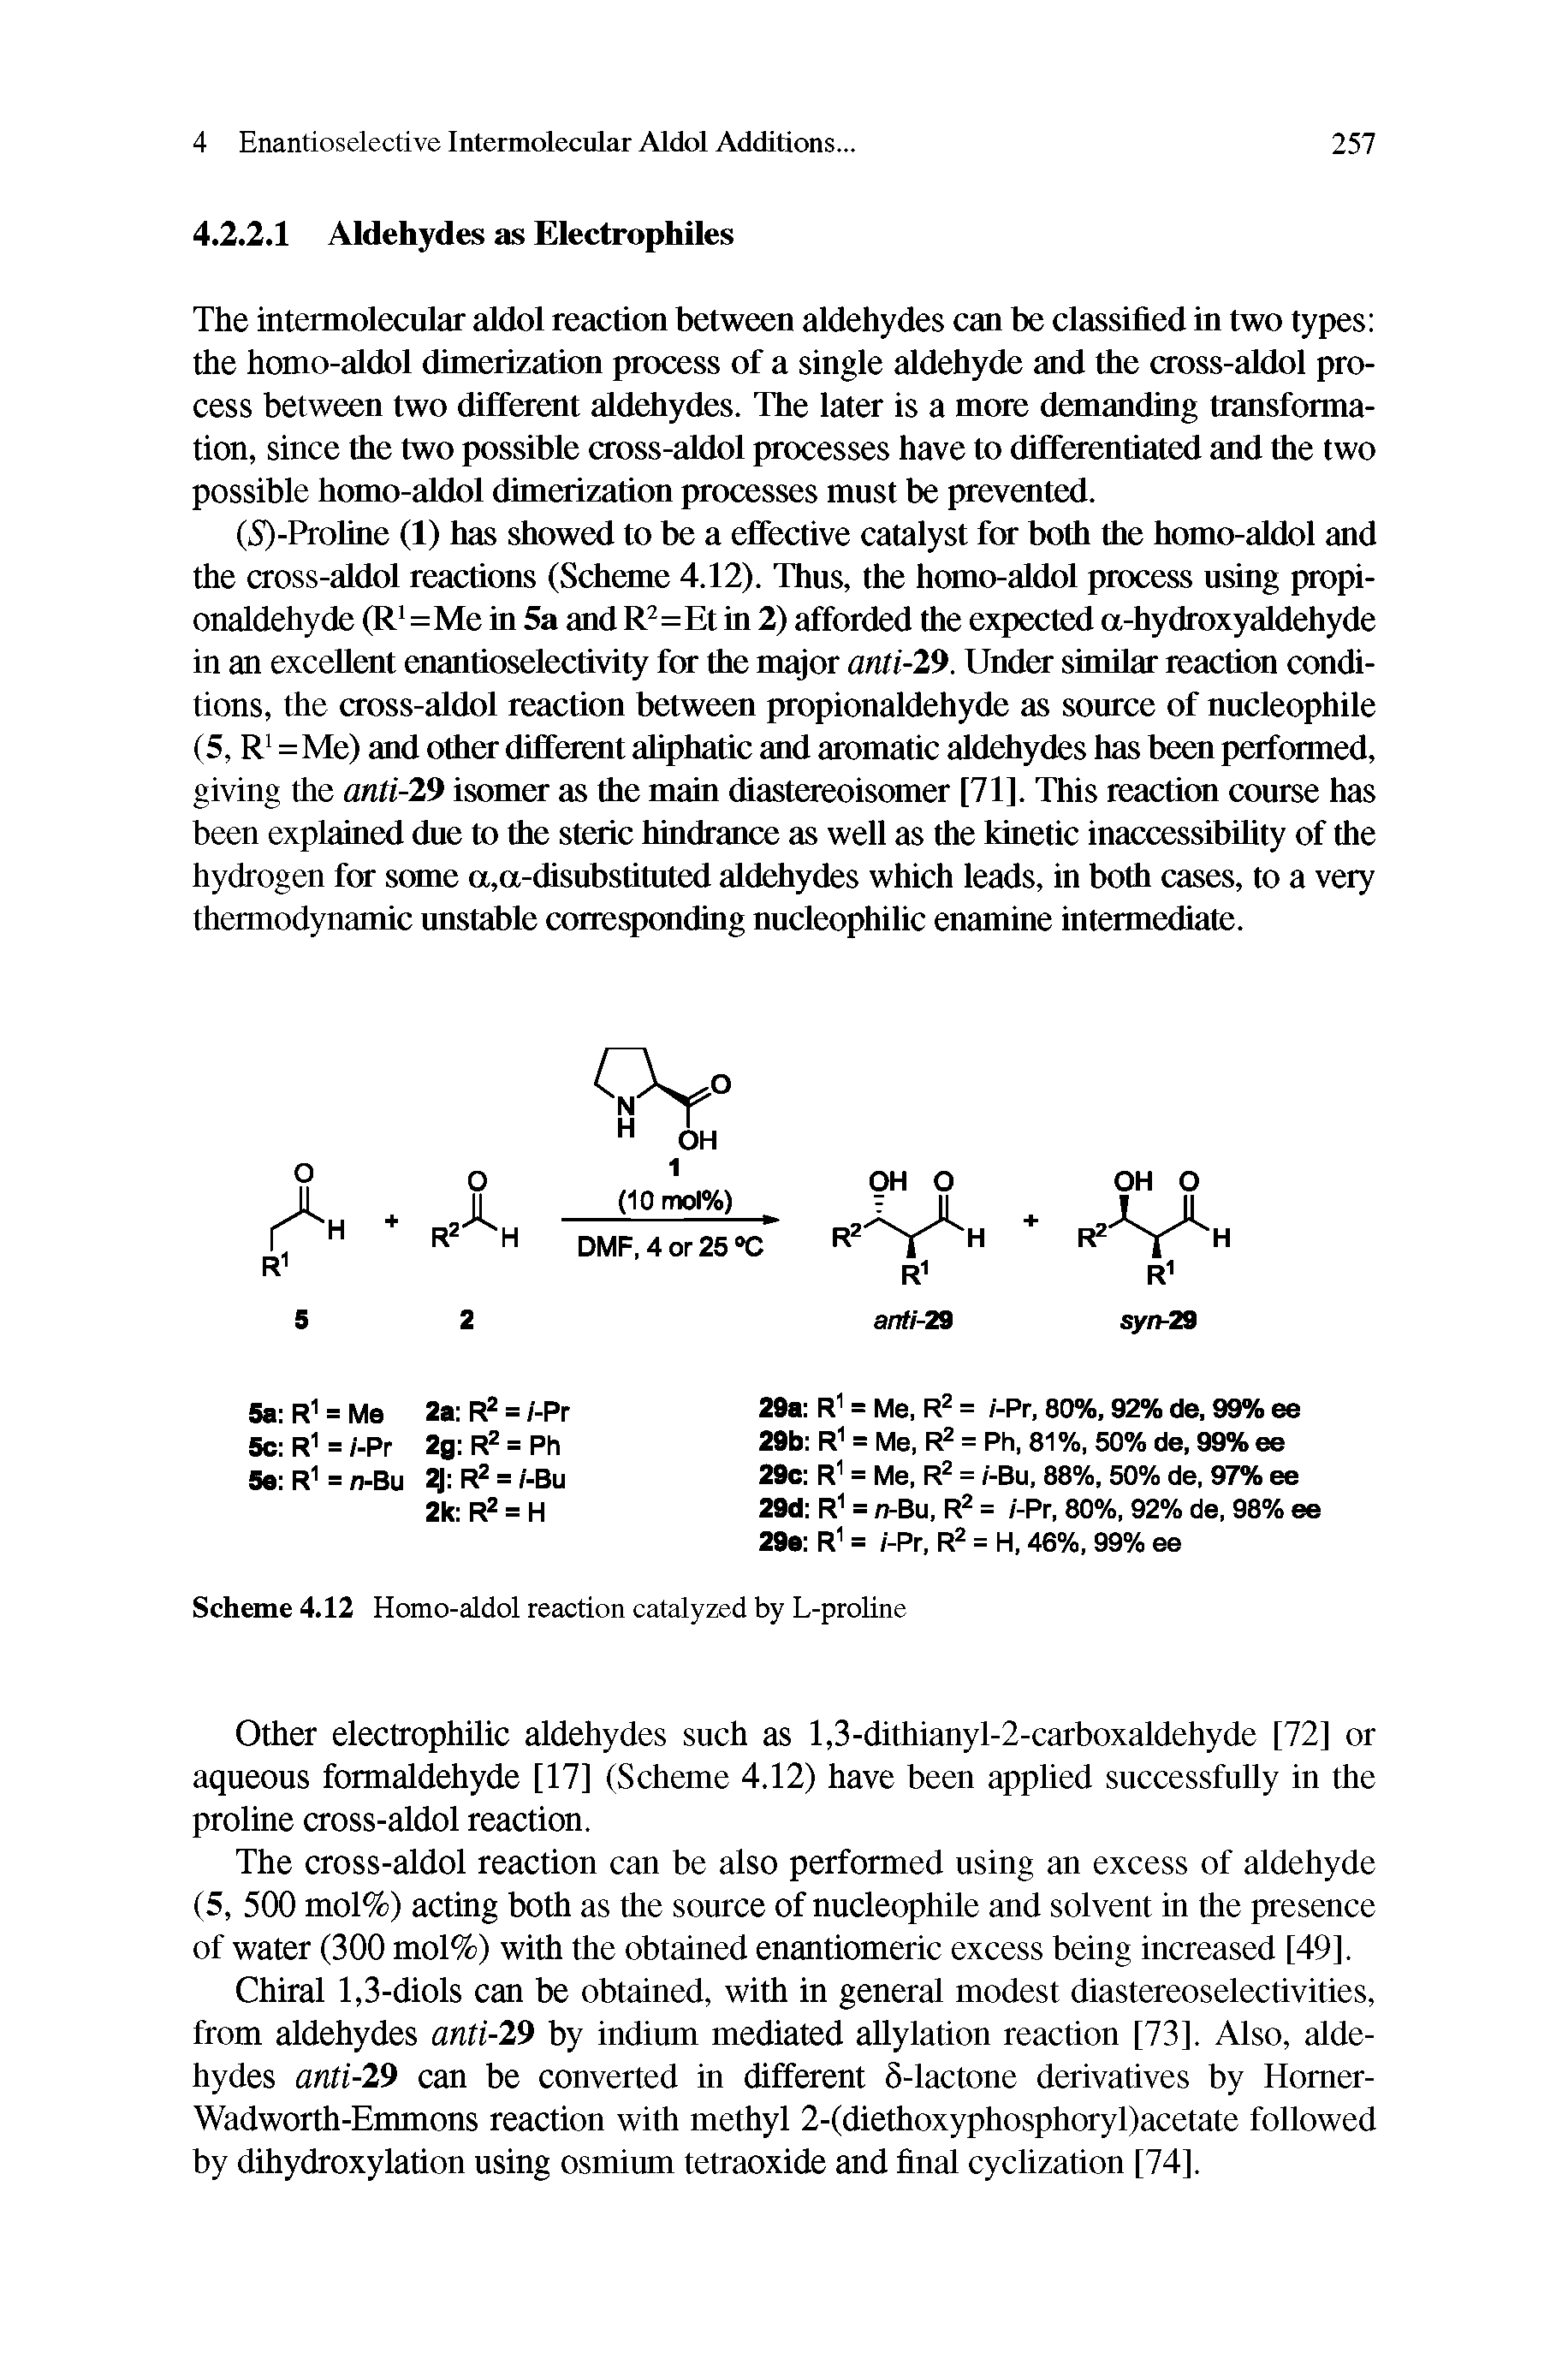 Scheme 4.12 Homo-aldol reaction catalyzed by L-proUne...